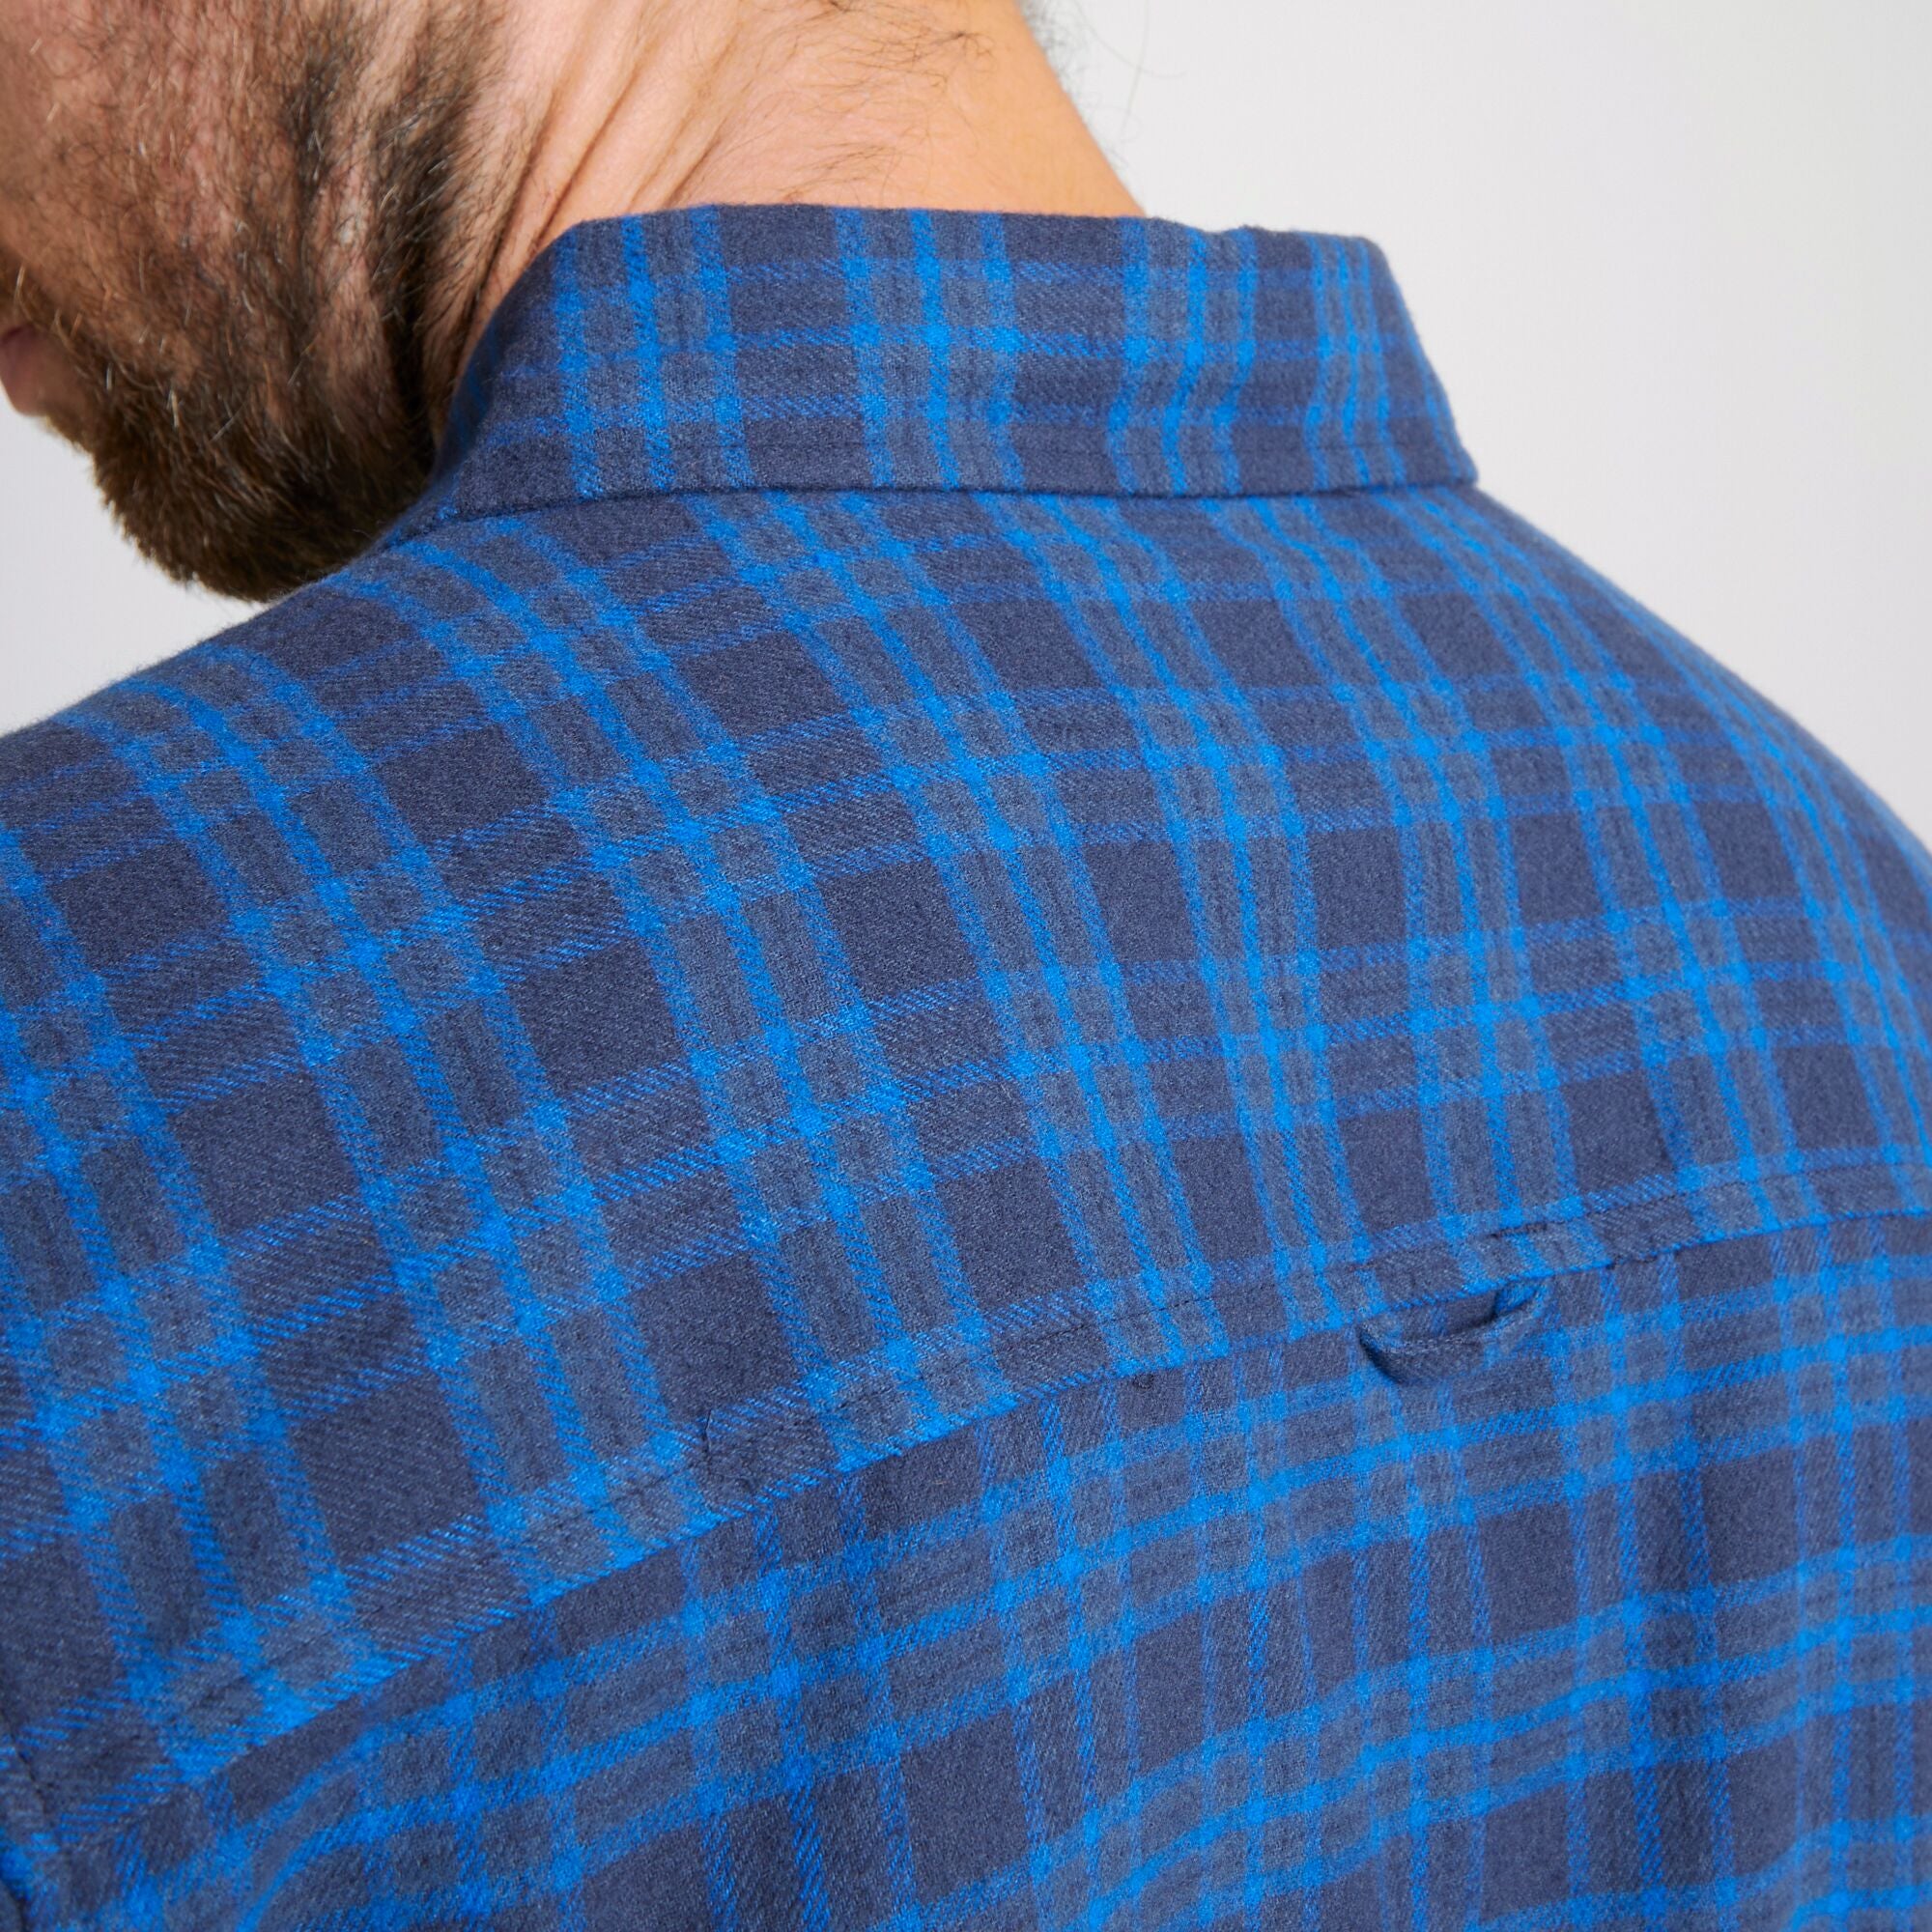 Men's Kiwi Check Long Sleeved Shirt | Blue Navy Check